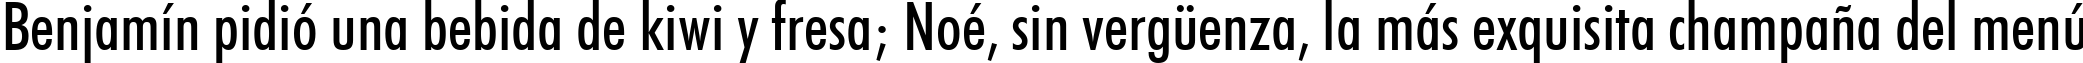 Пример написания шрифтом Futura Medium Condensed BT текста на испанском